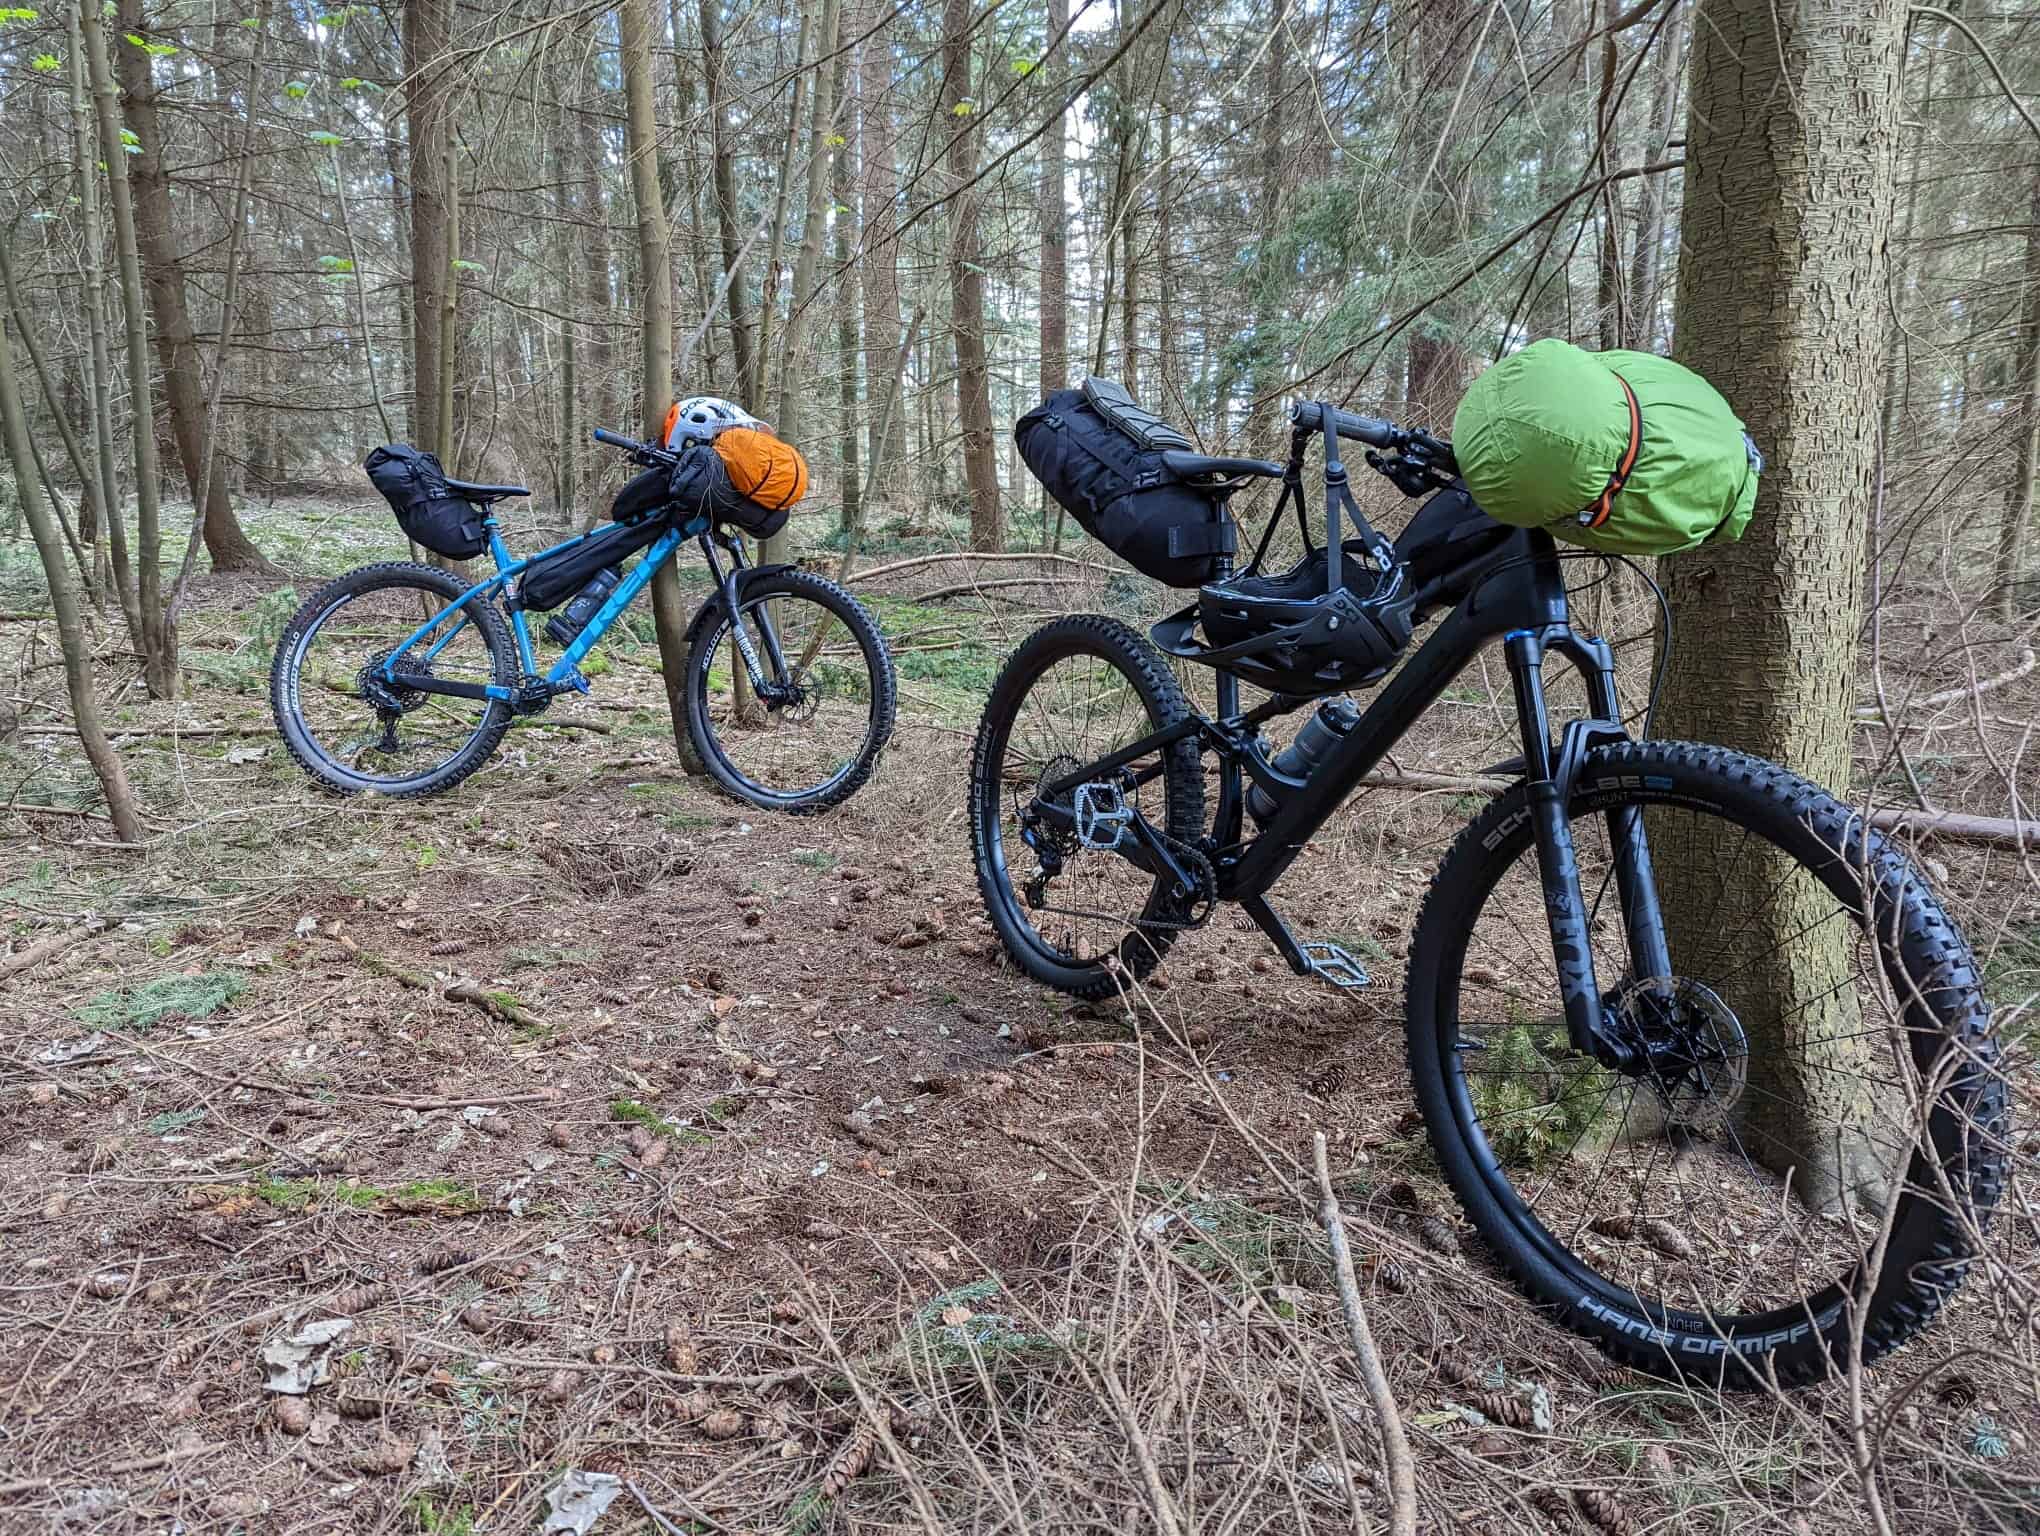 bike camping